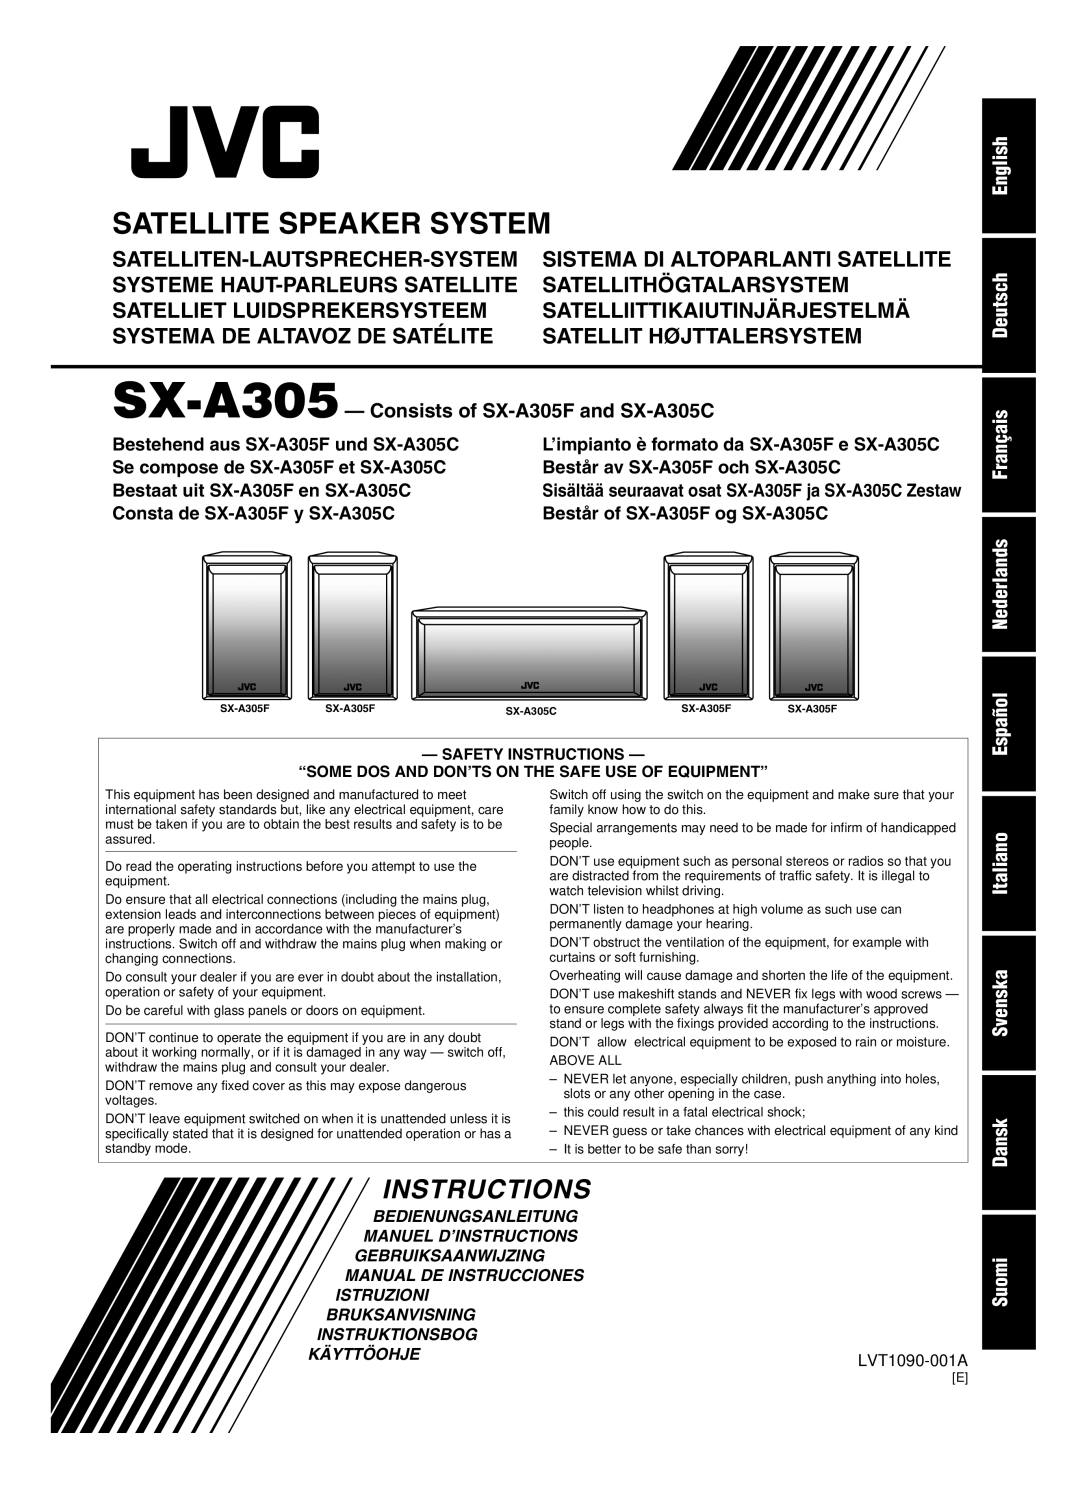 JVC manual SX-A305 - Consists of SX-A305Fand SX-A305C, English Deutsch Français, Español Nederlands, Suomi, Istruzioni 